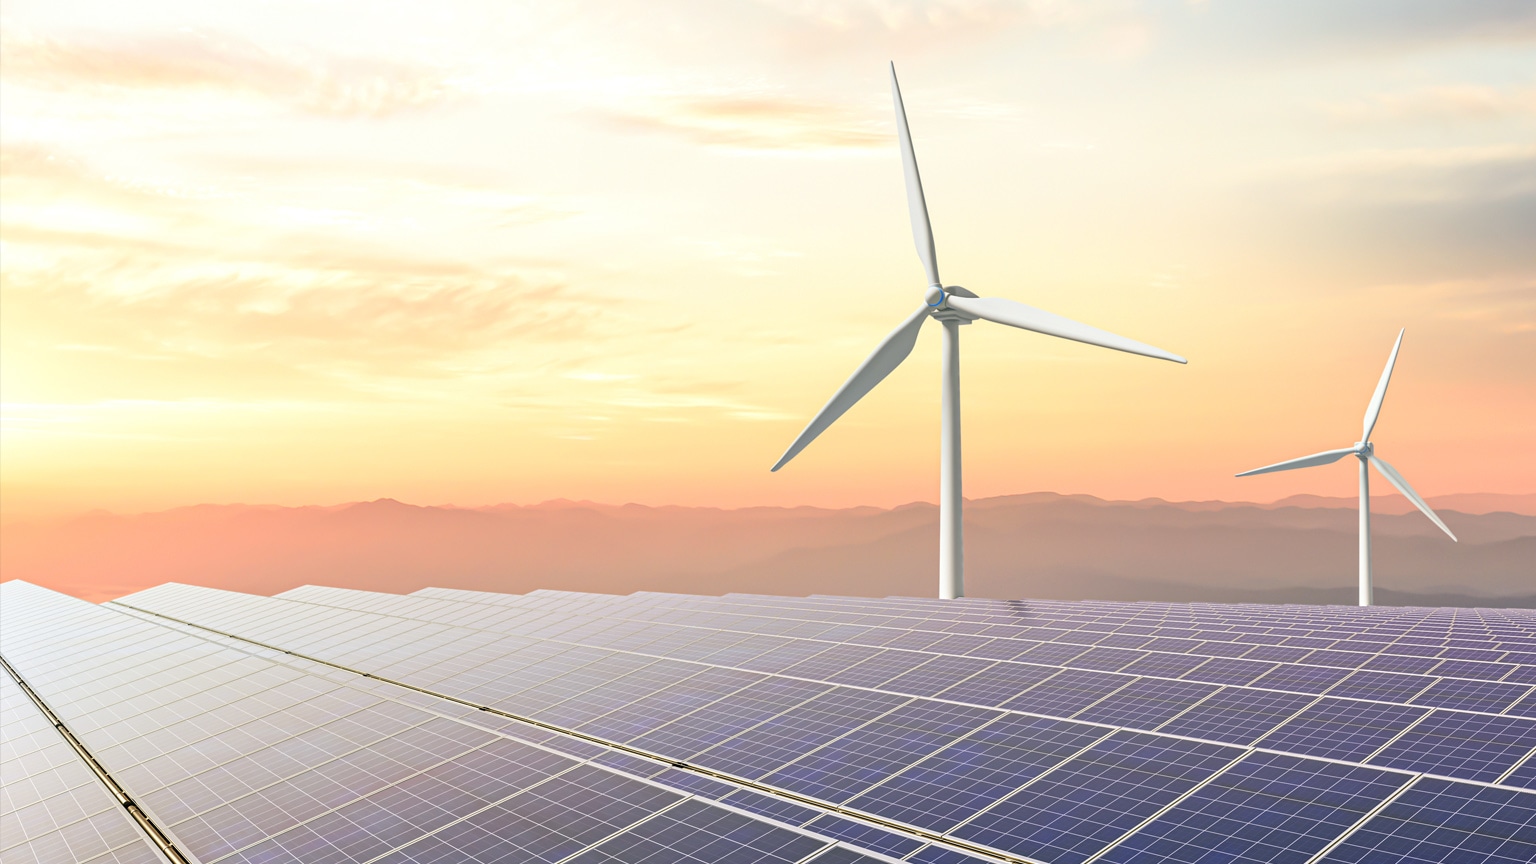 An era of renewable energy growth and development | McKinsey